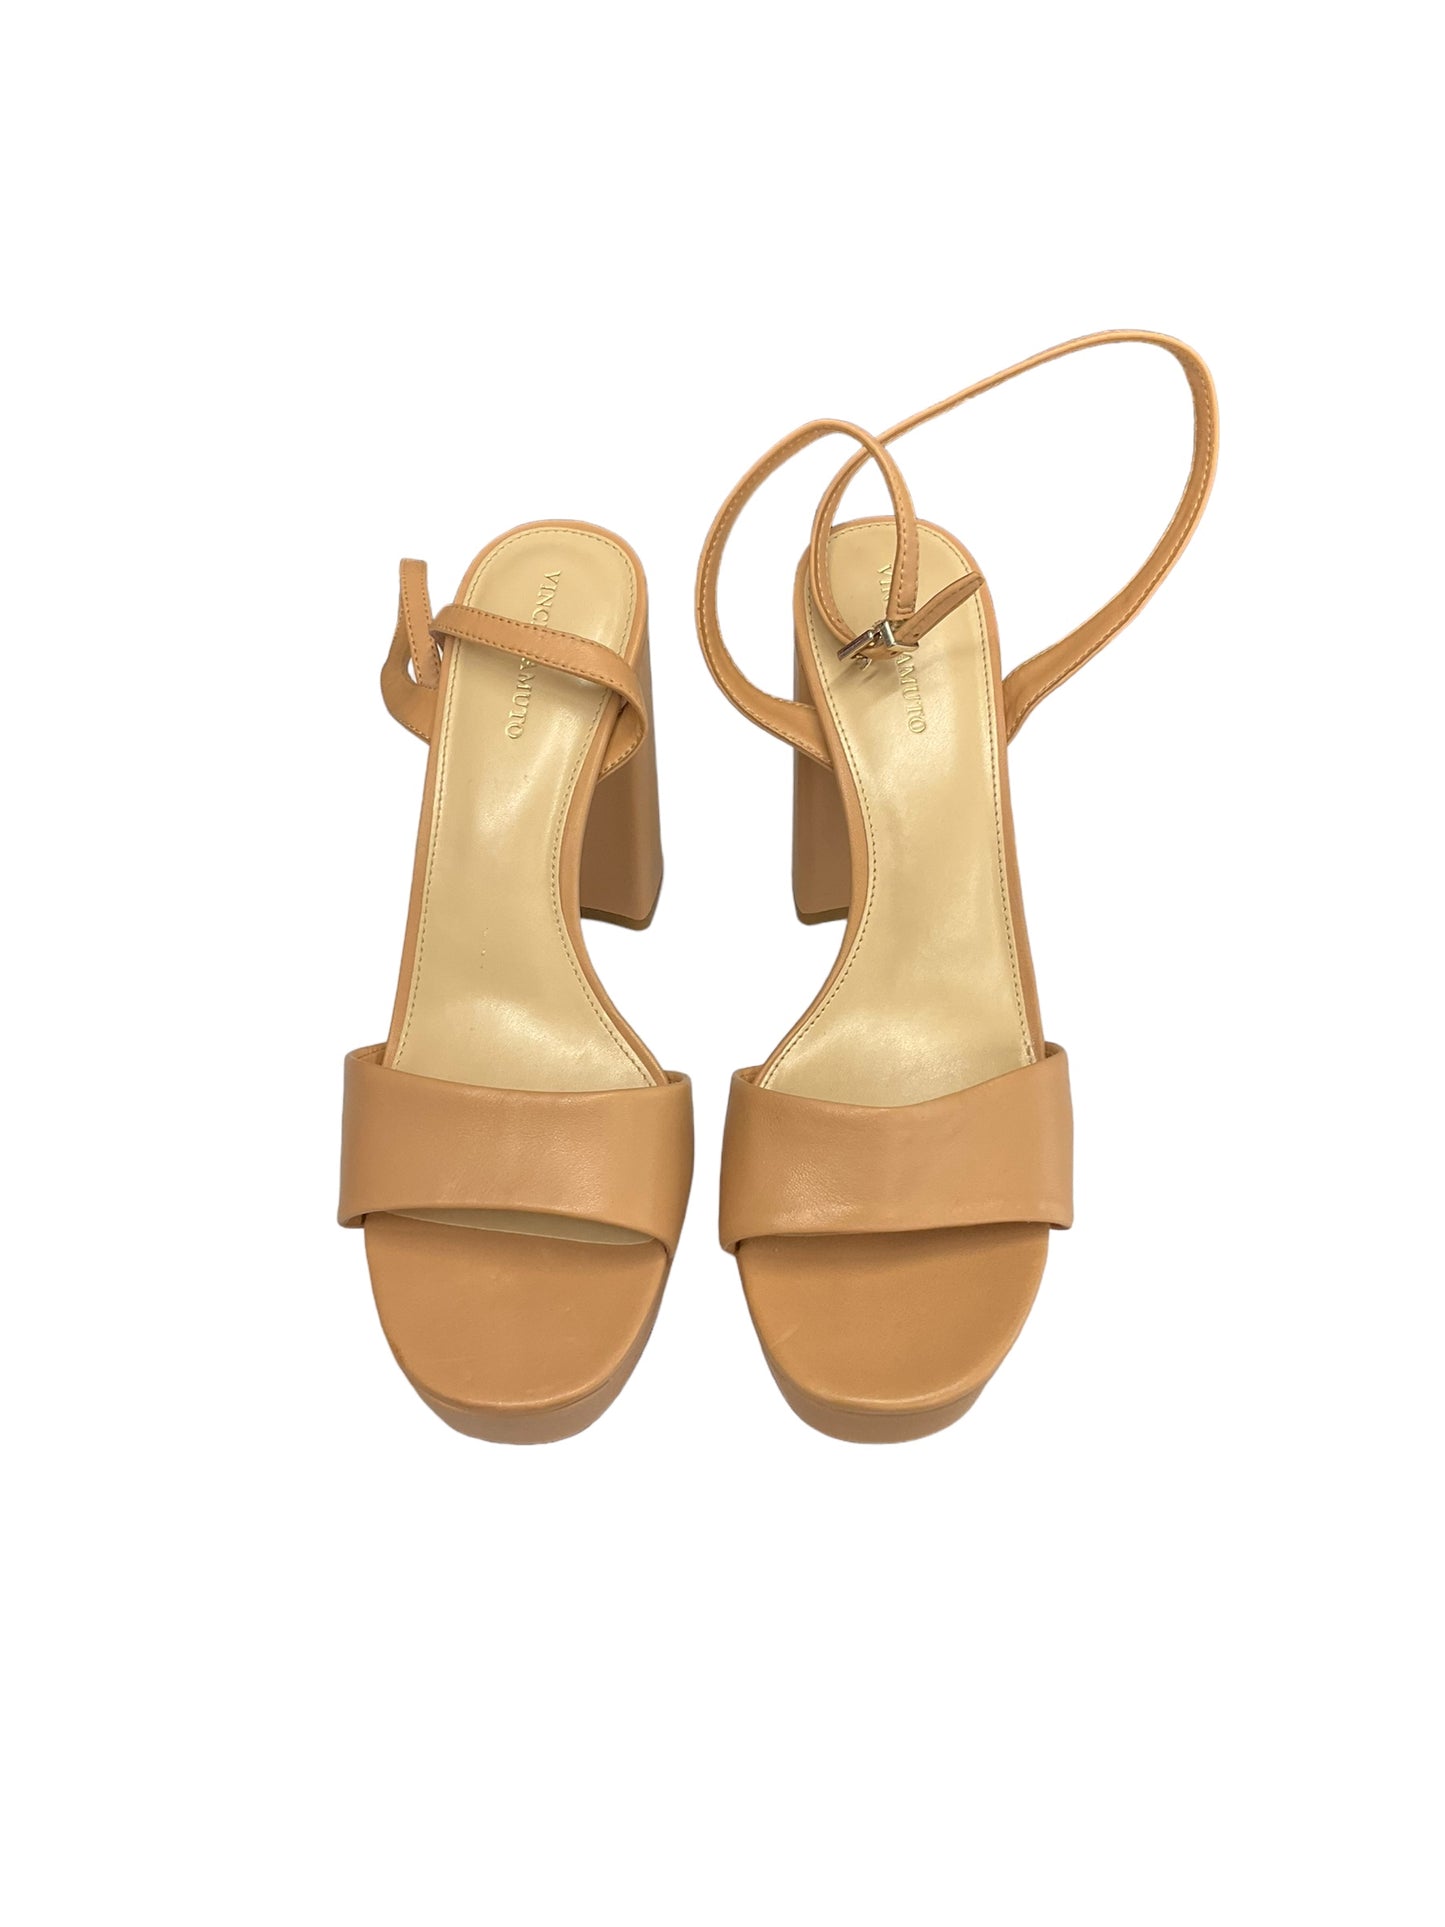 Sandals Heels Platform By Vince Camuto  Size: 9.5